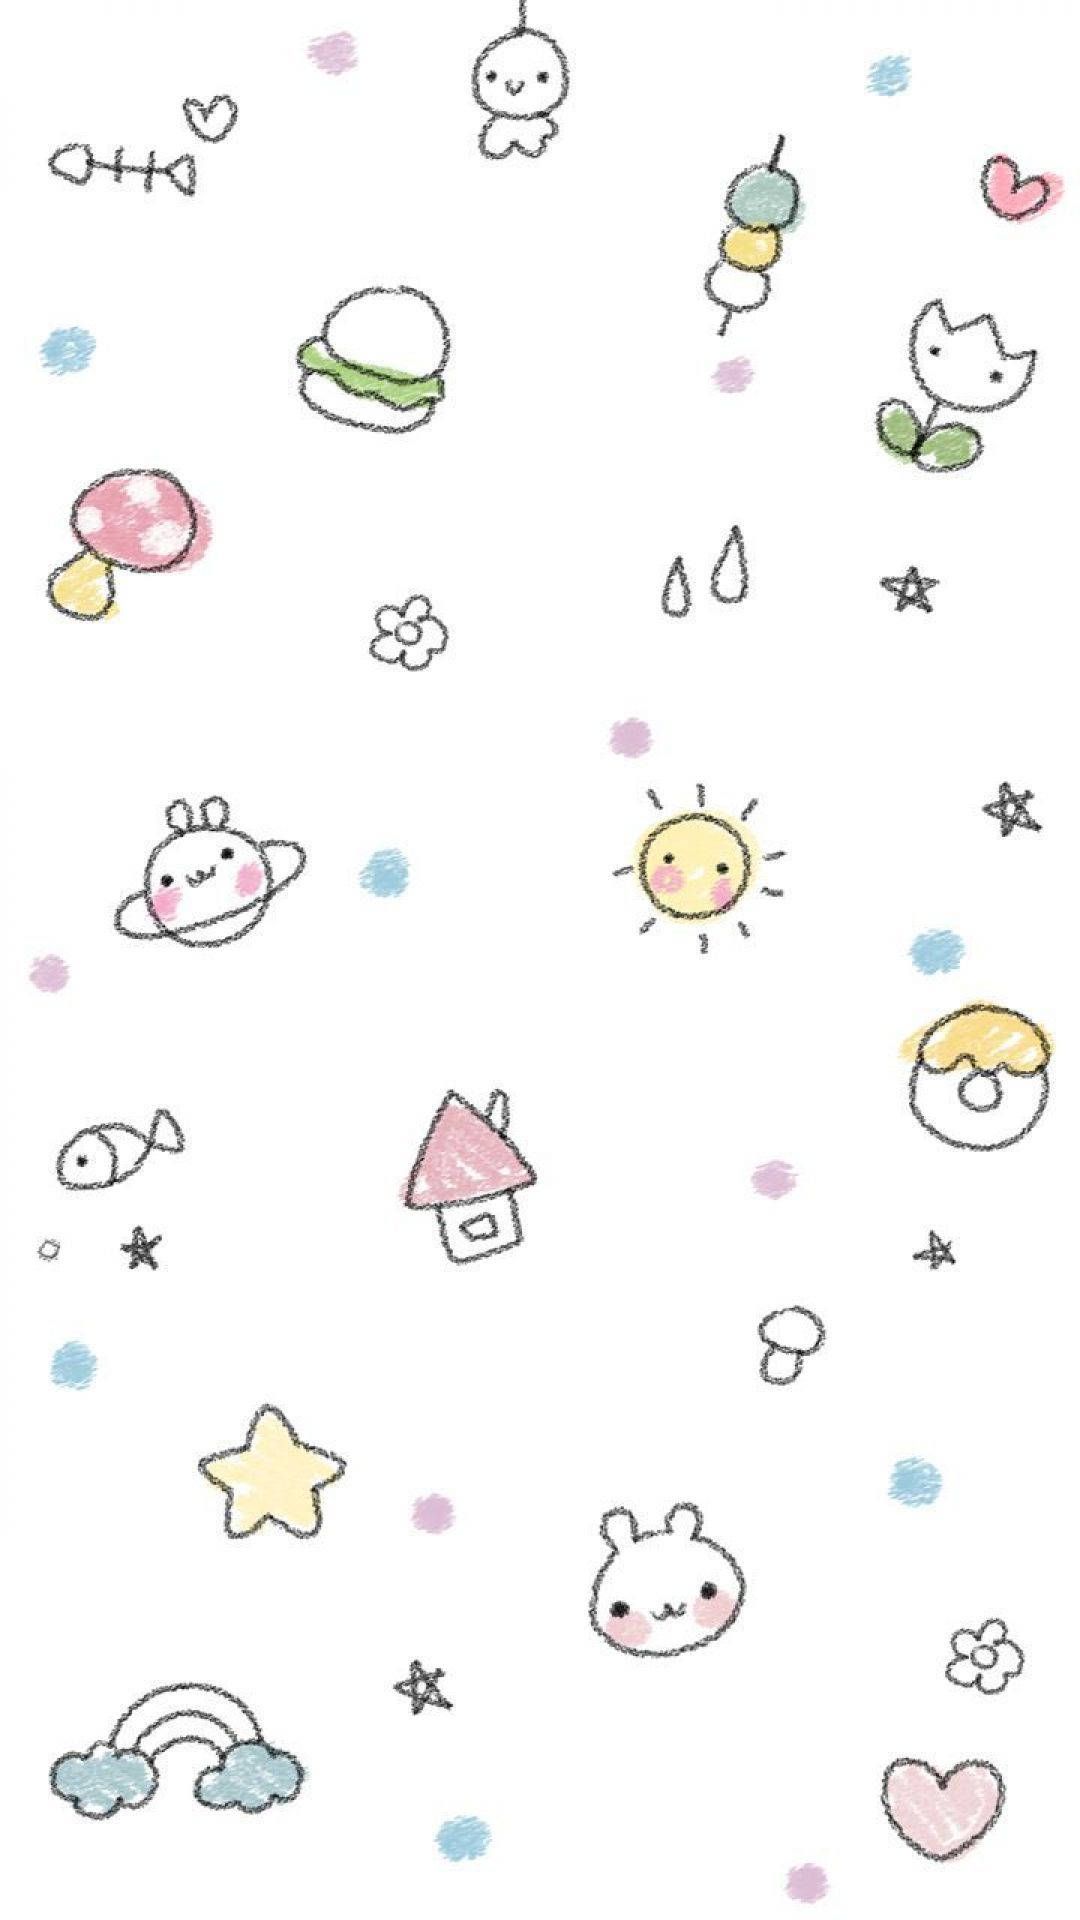 Free Cute Kawaii Aesthetic Wallpaper Downloads, Cute Kawaii Aesthetic Wallpaper for FREE